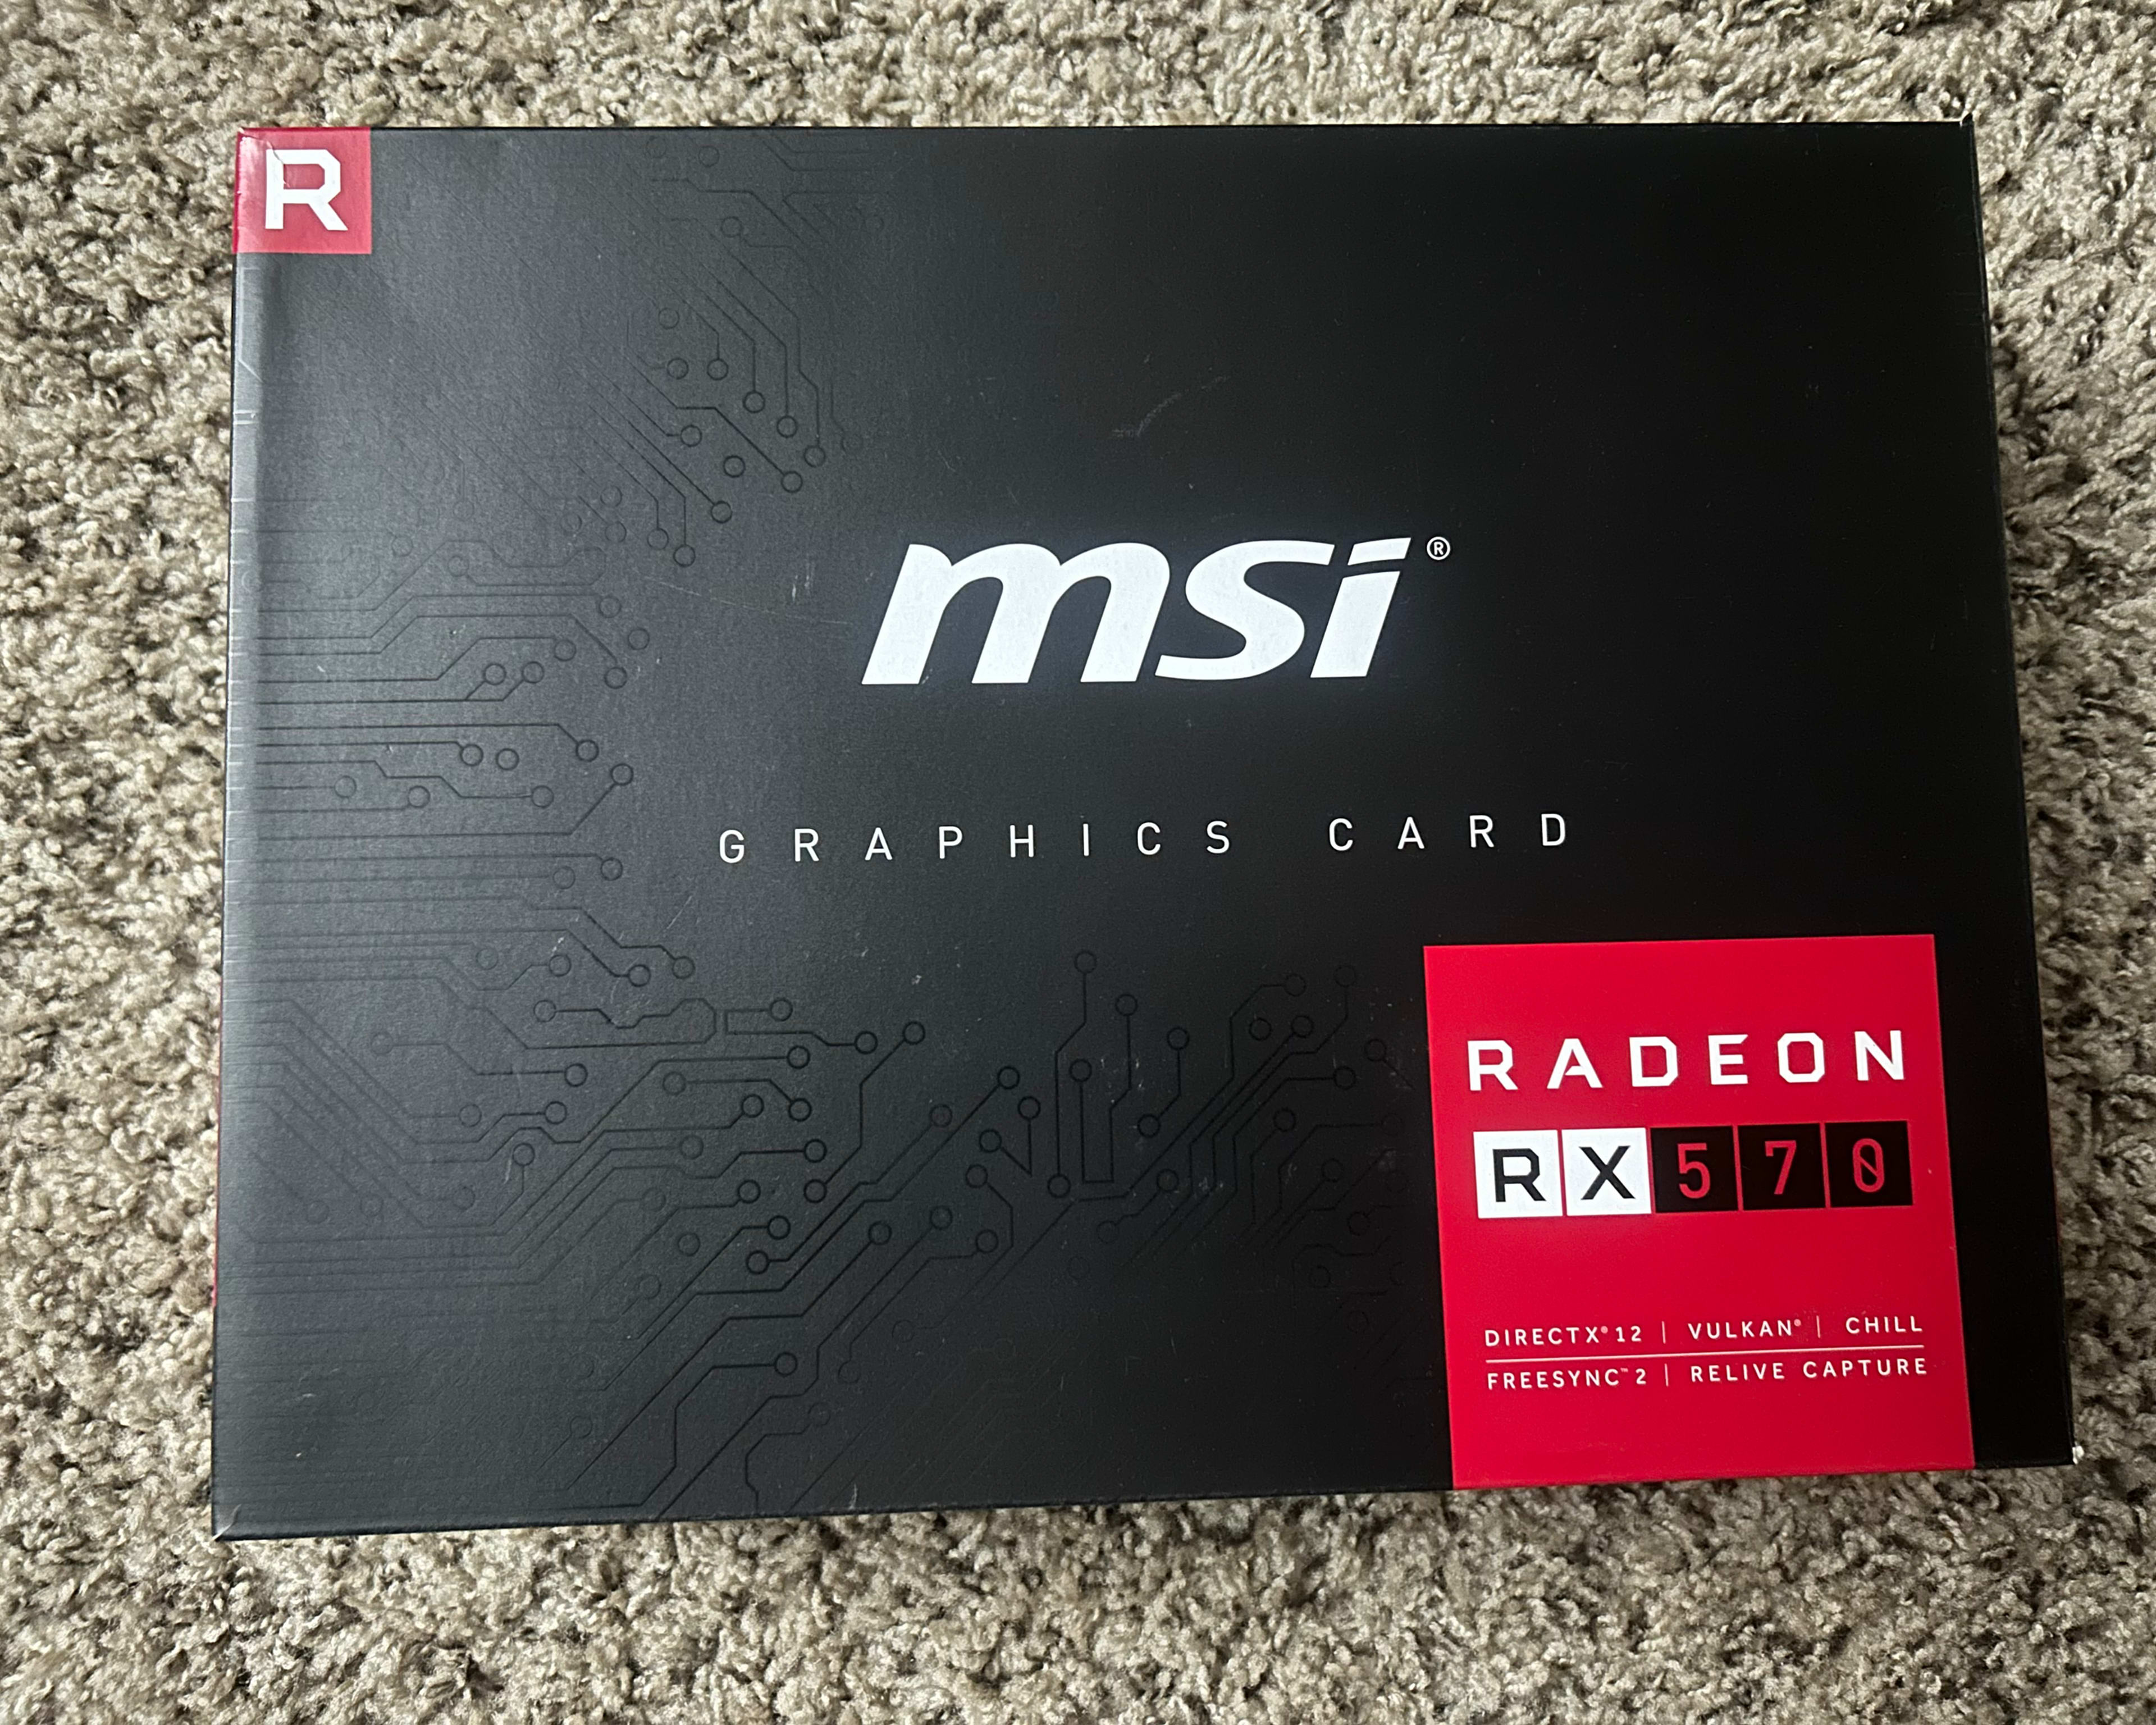 MSI Radeon RX 570 8GB GDDR5 Graphics Card+Free Gift